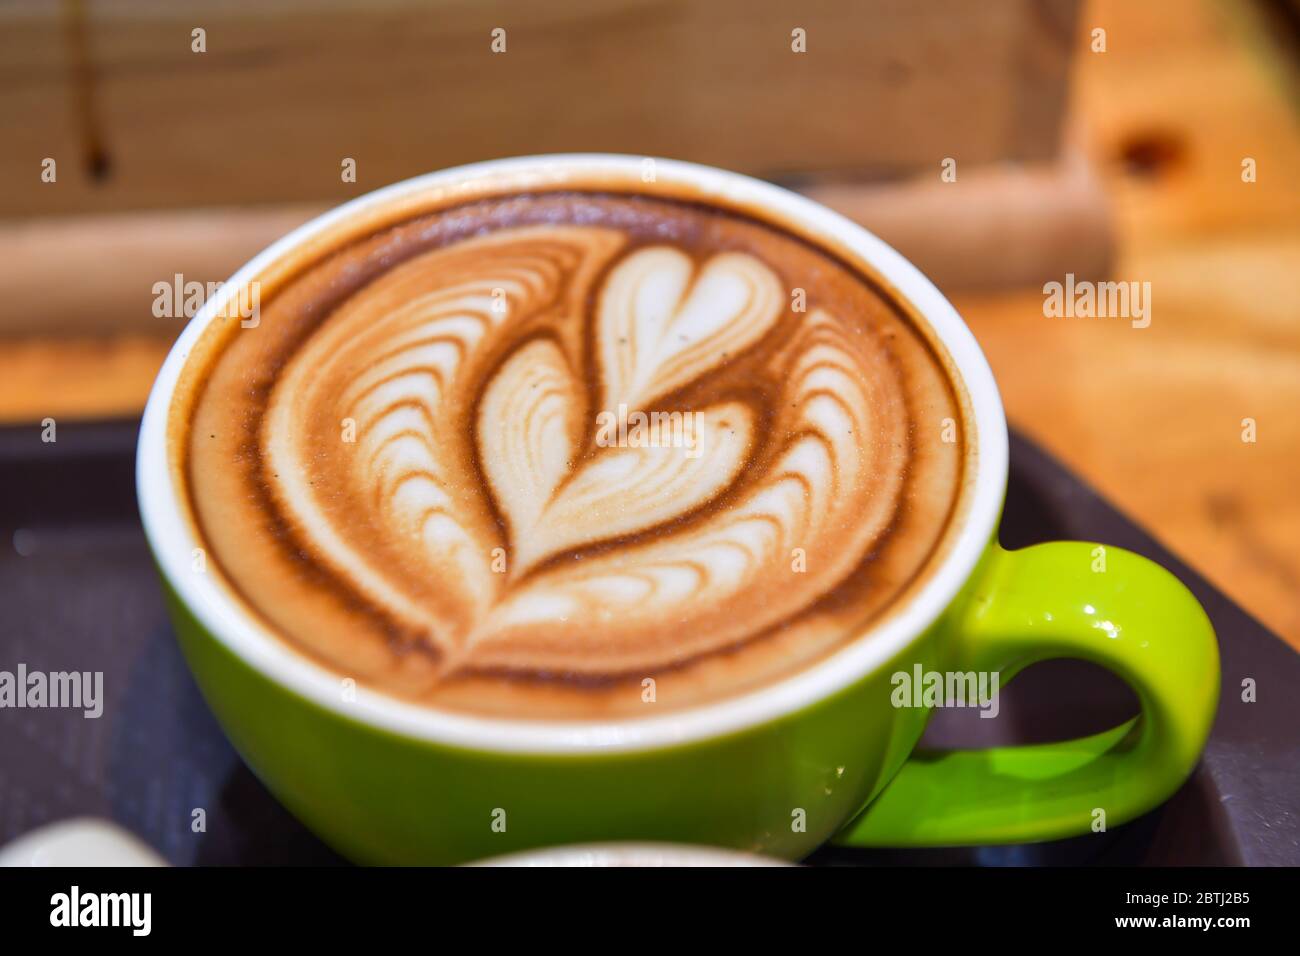 Formas de café de arte en tazas verdes Fotografía de stock - Alamy